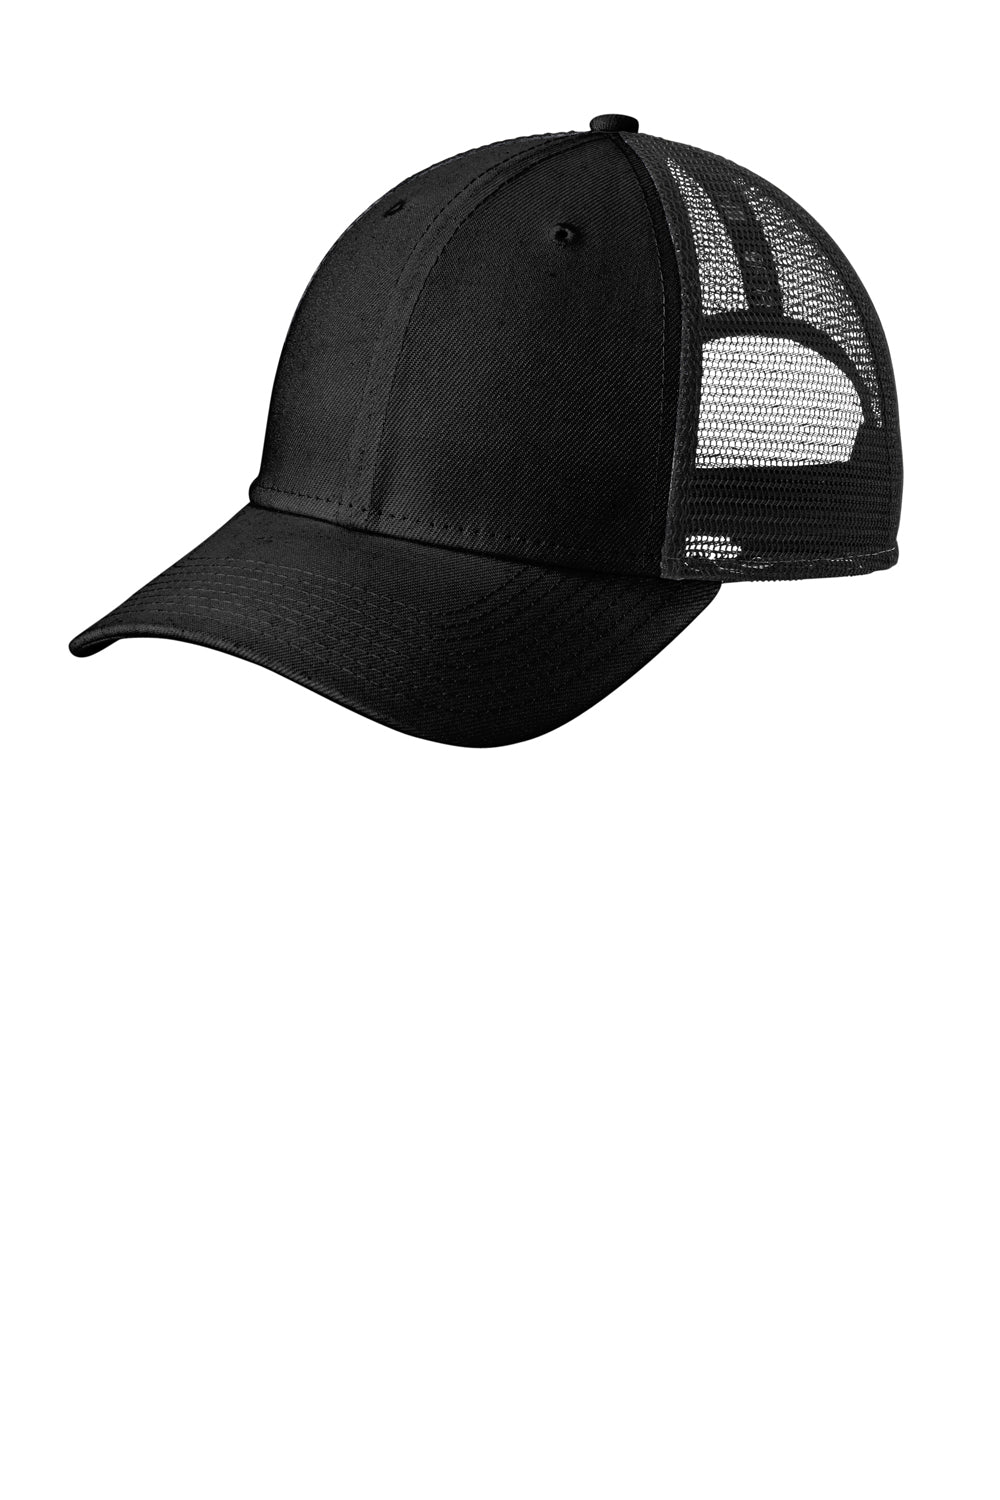 New Era NE208 Mens Recycled Snapback Hat Black Front